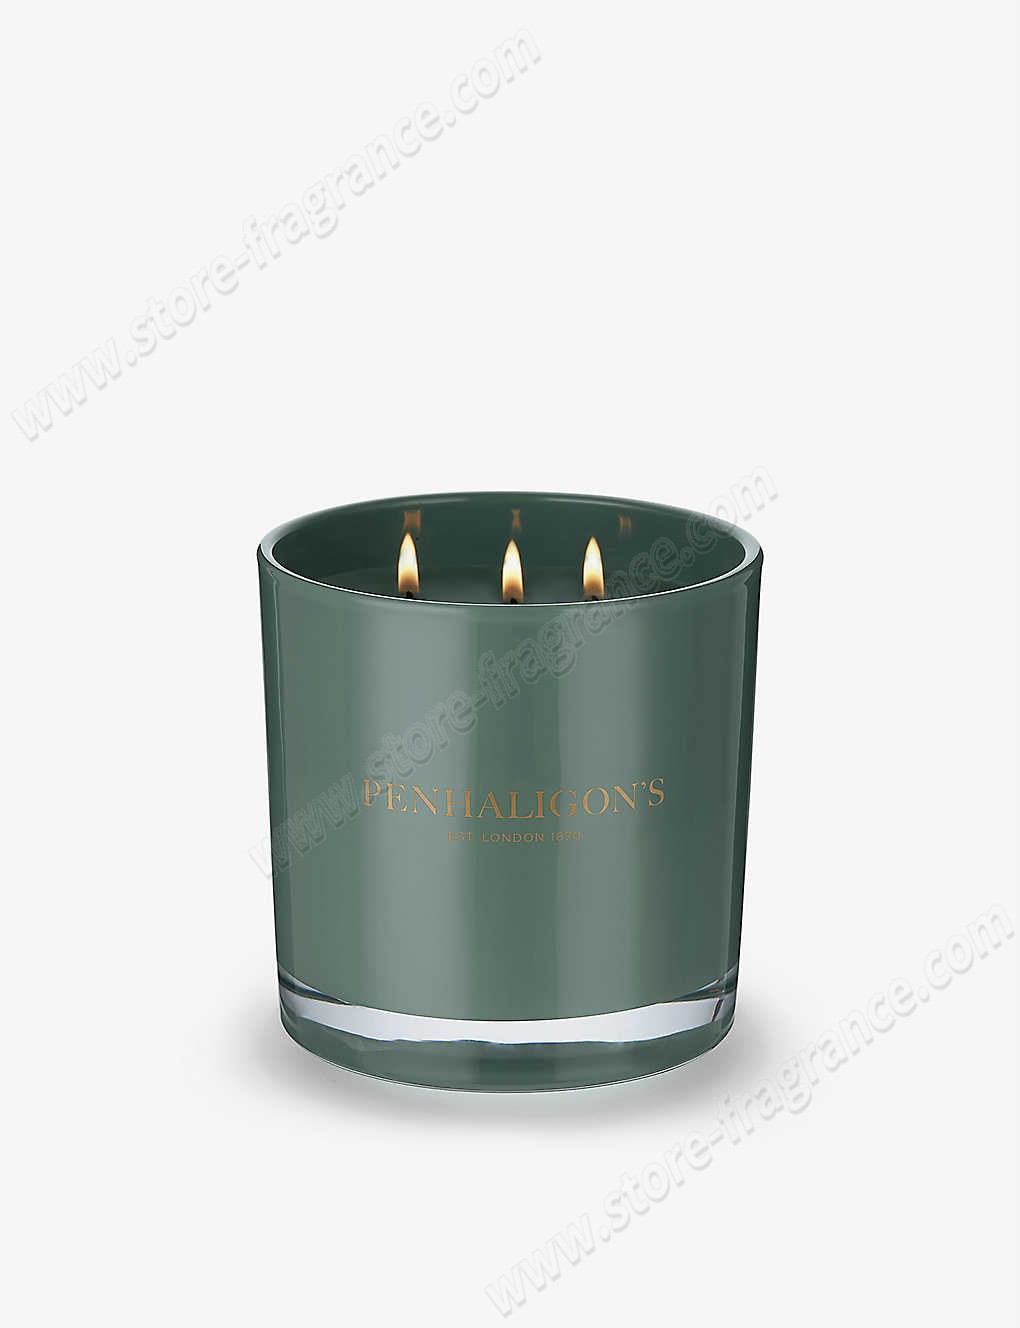 PENHALIGONS/Comoros Pearl scented candle 650g ✿ Discount Store - PENHALIGONS/Comoros Pearl scented candle 650g ✿ Discount Store